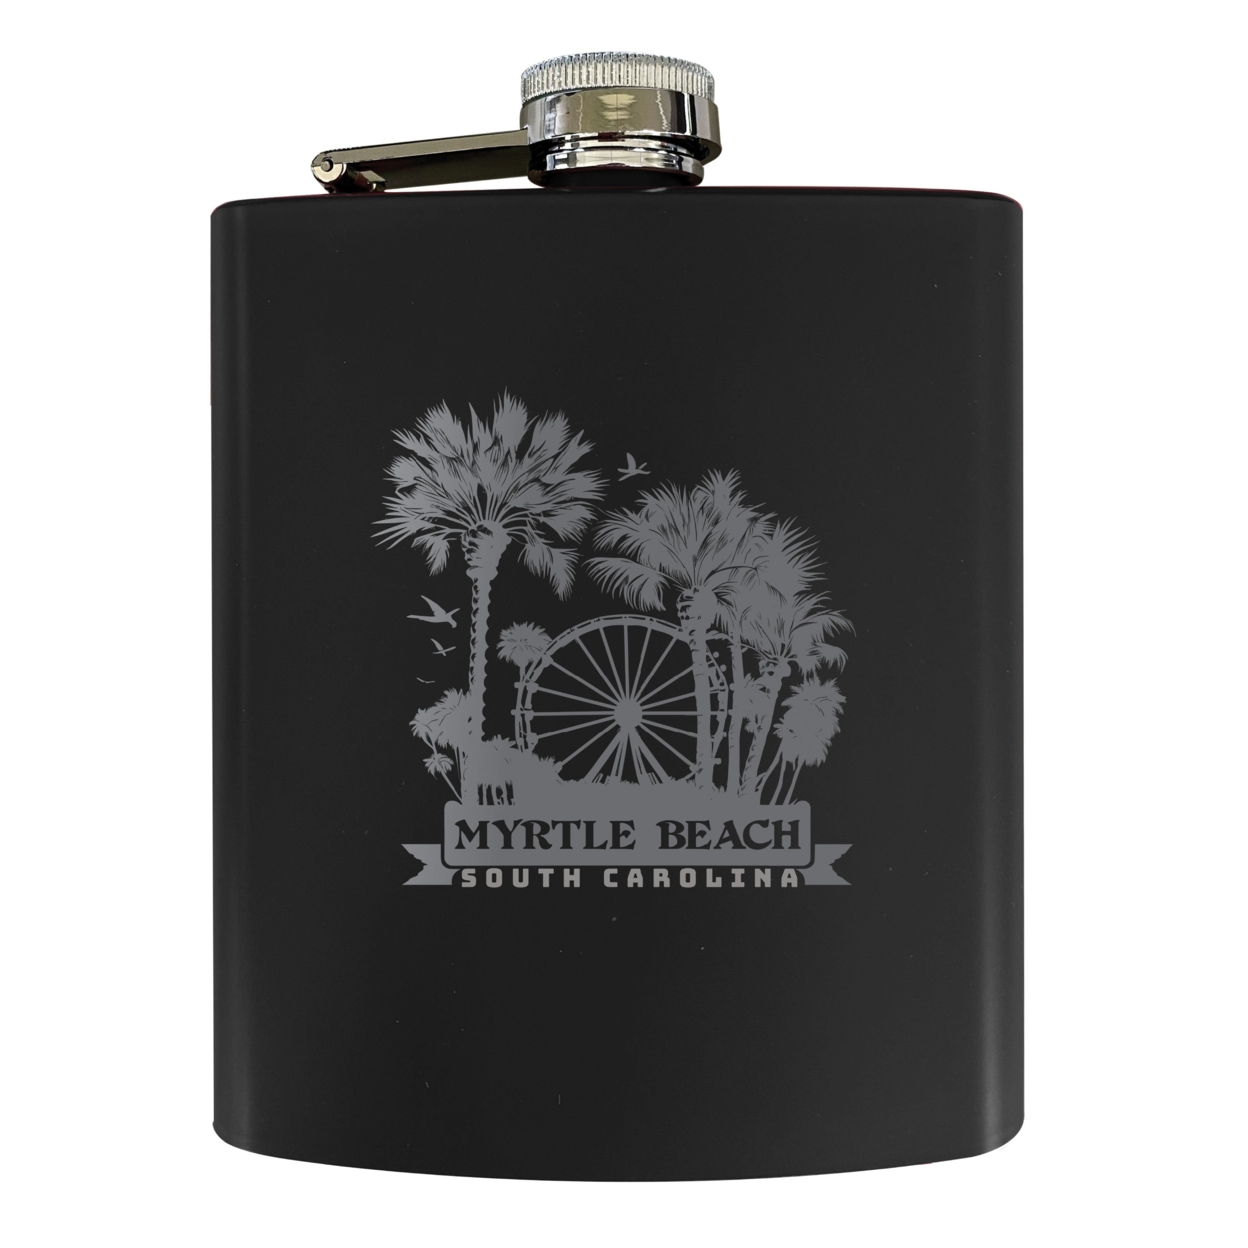 Myrtle Beach South Carolina Laser Etched Souvenir 7 Oz Leather Steel Flask - Black